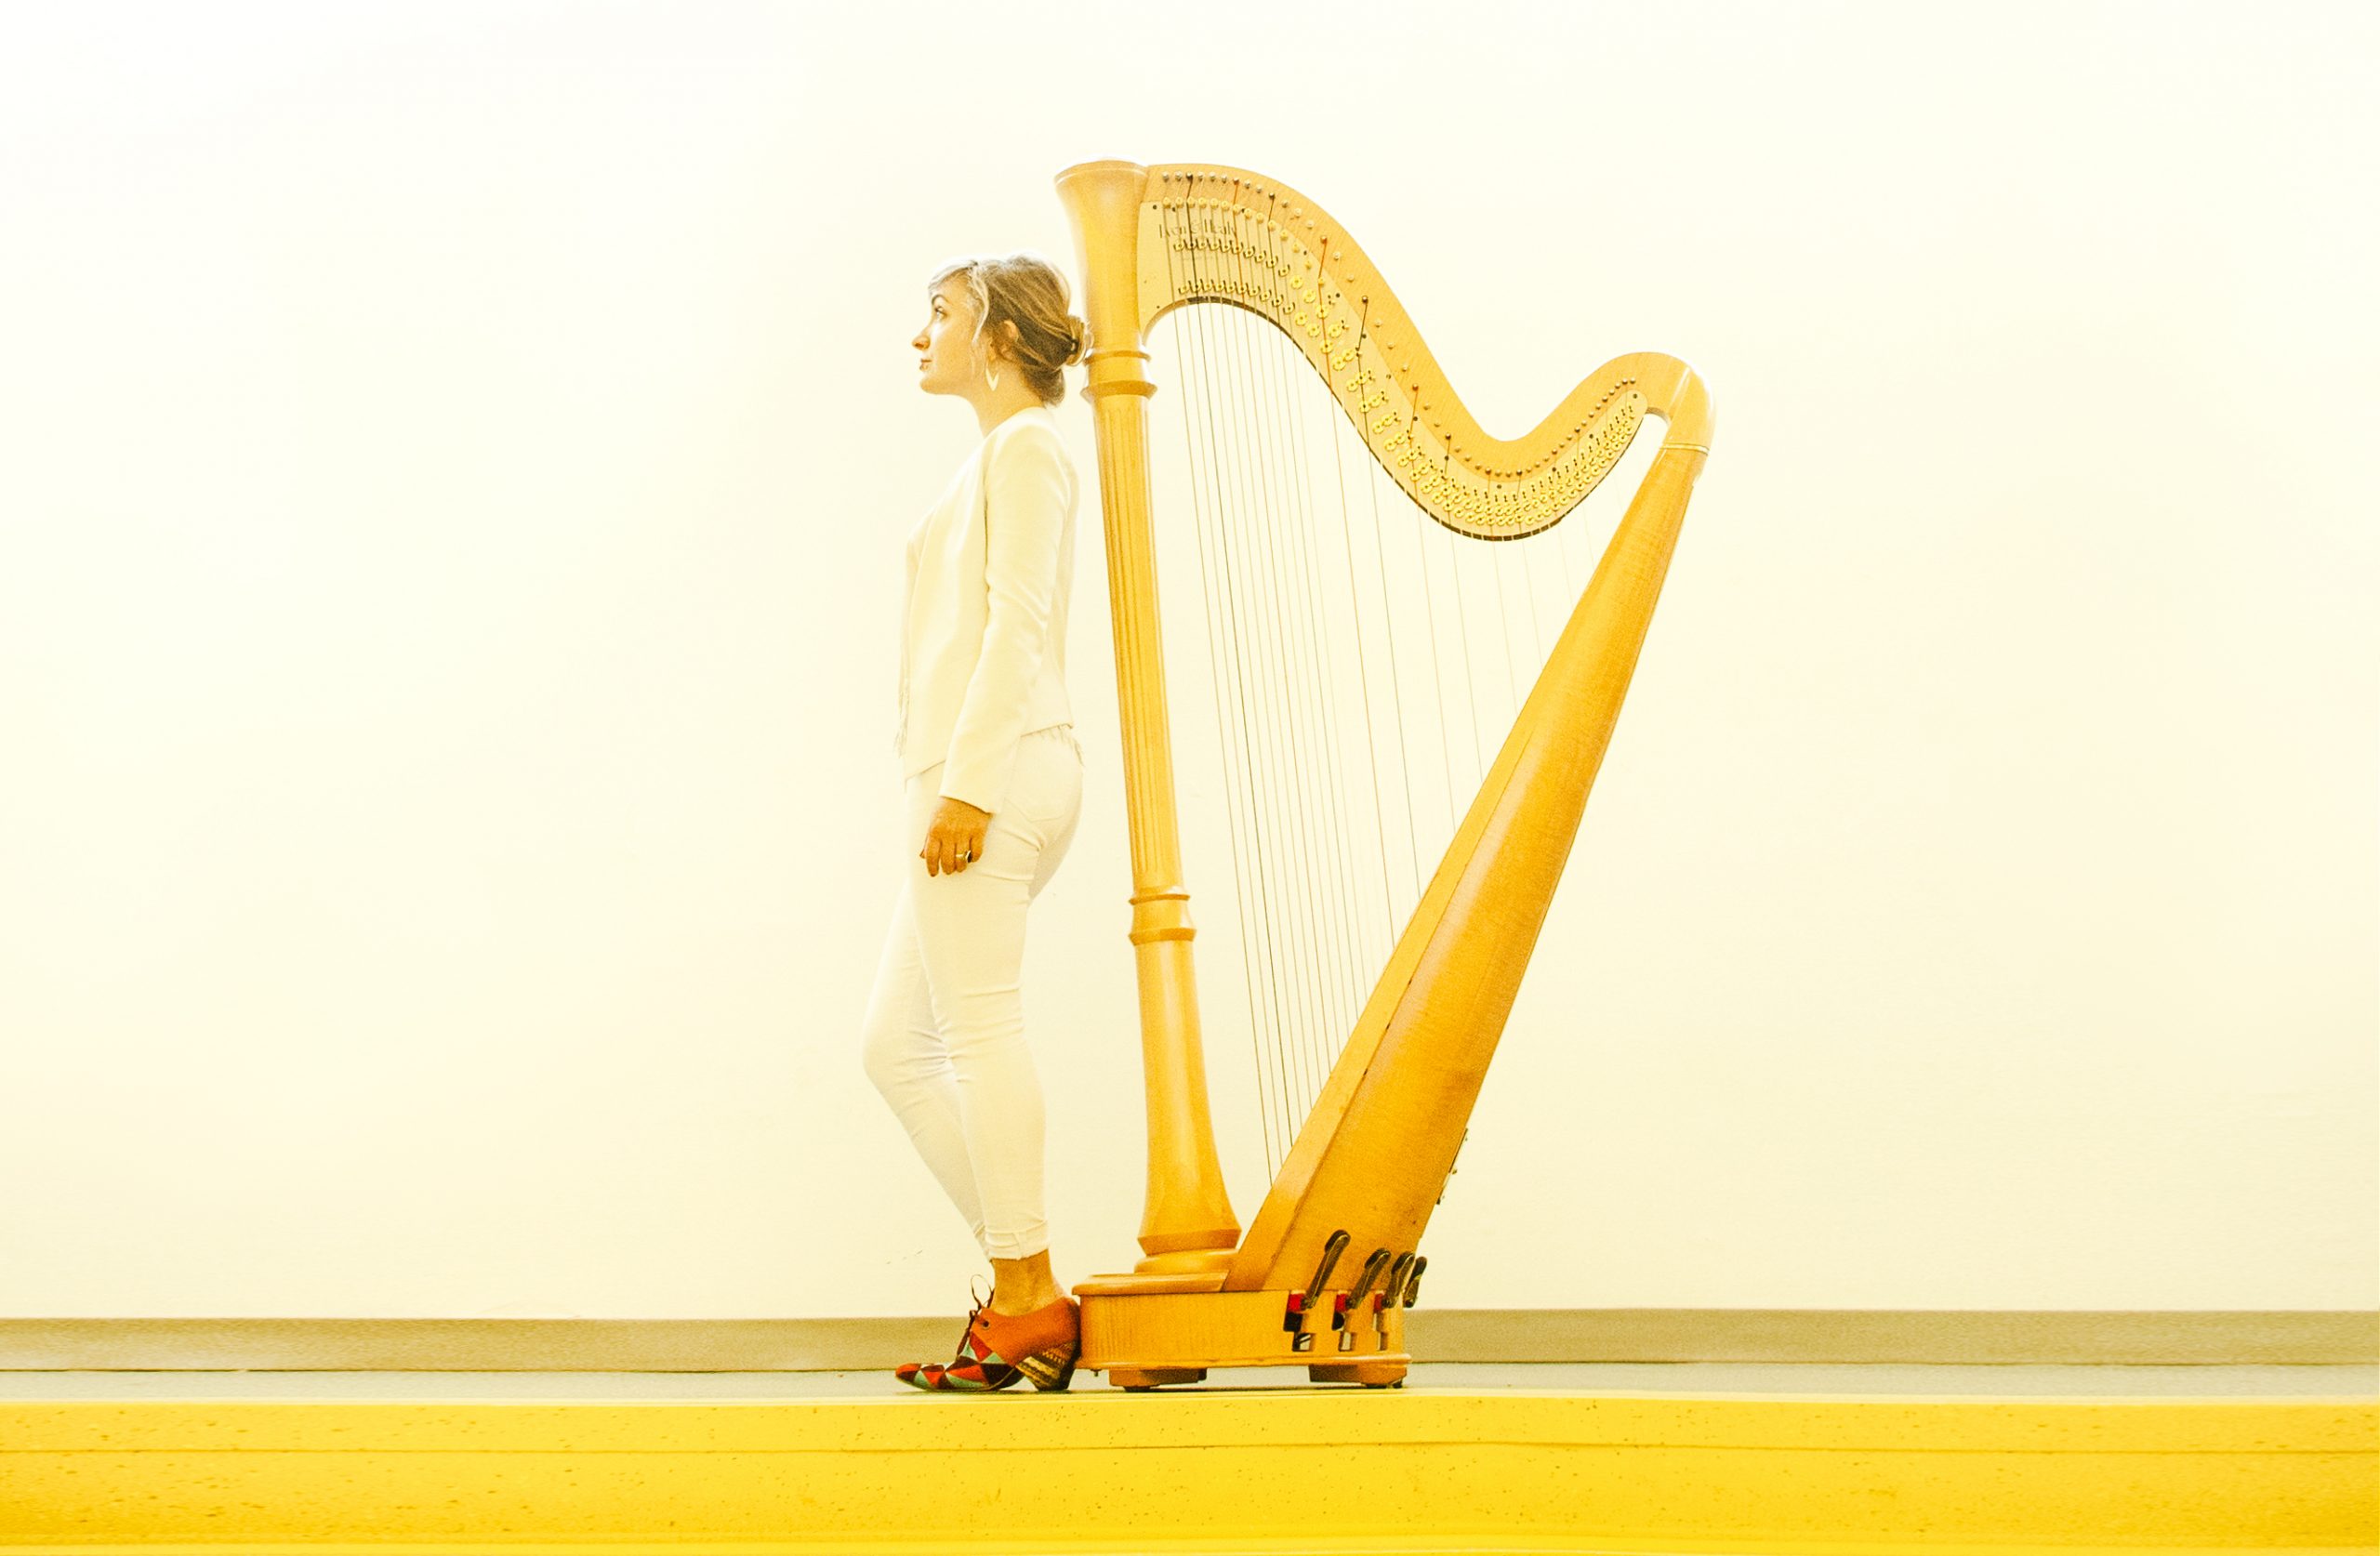 About Vancouver Harpist